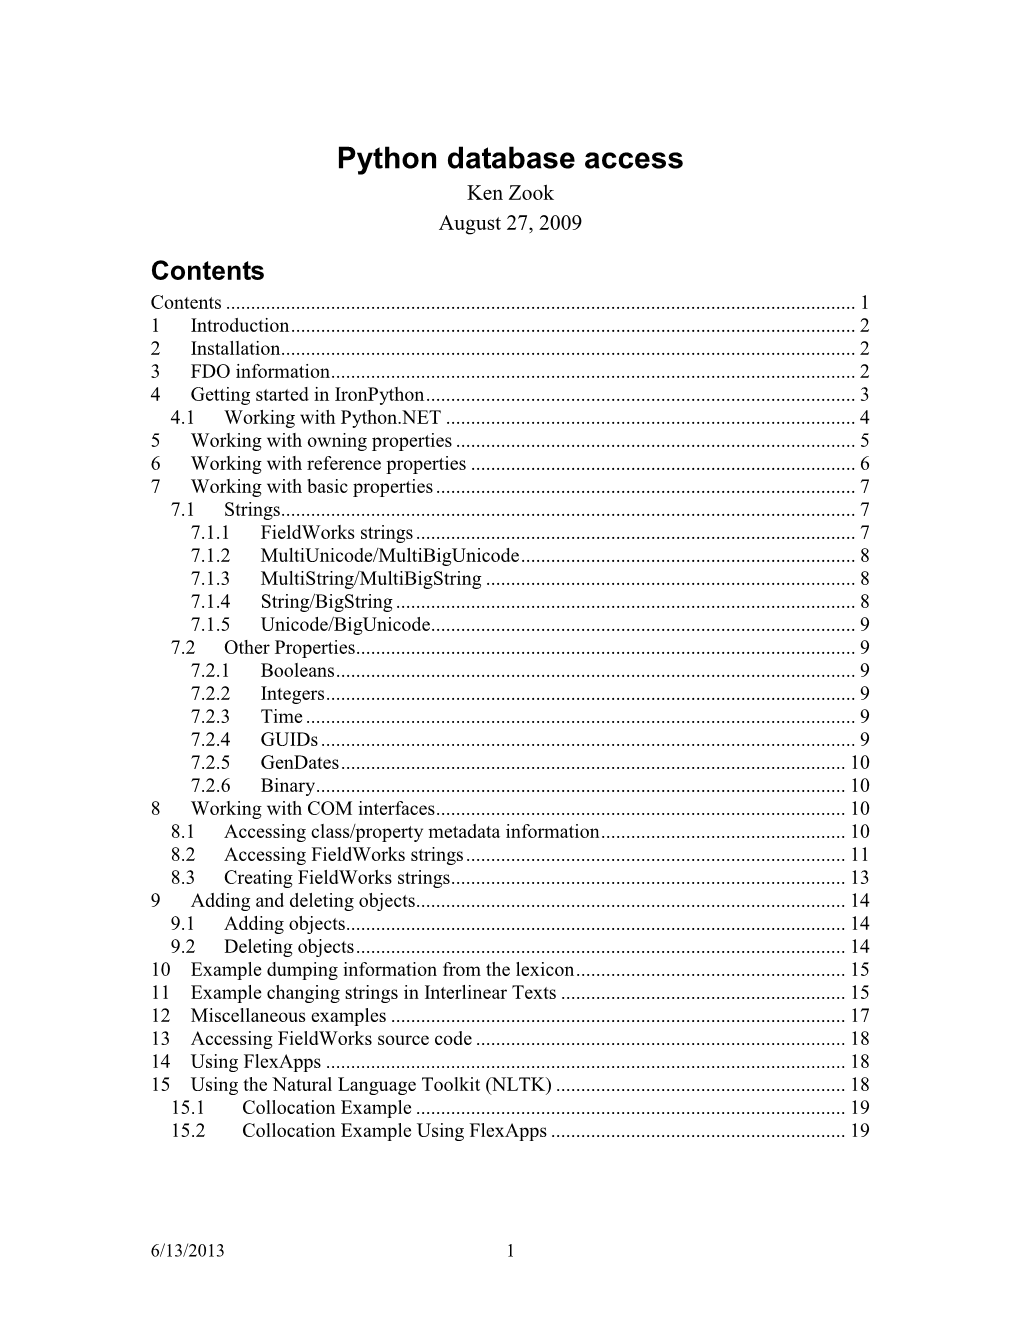 Python Database Access Ken Zook August 27, 2009 Contents Contents